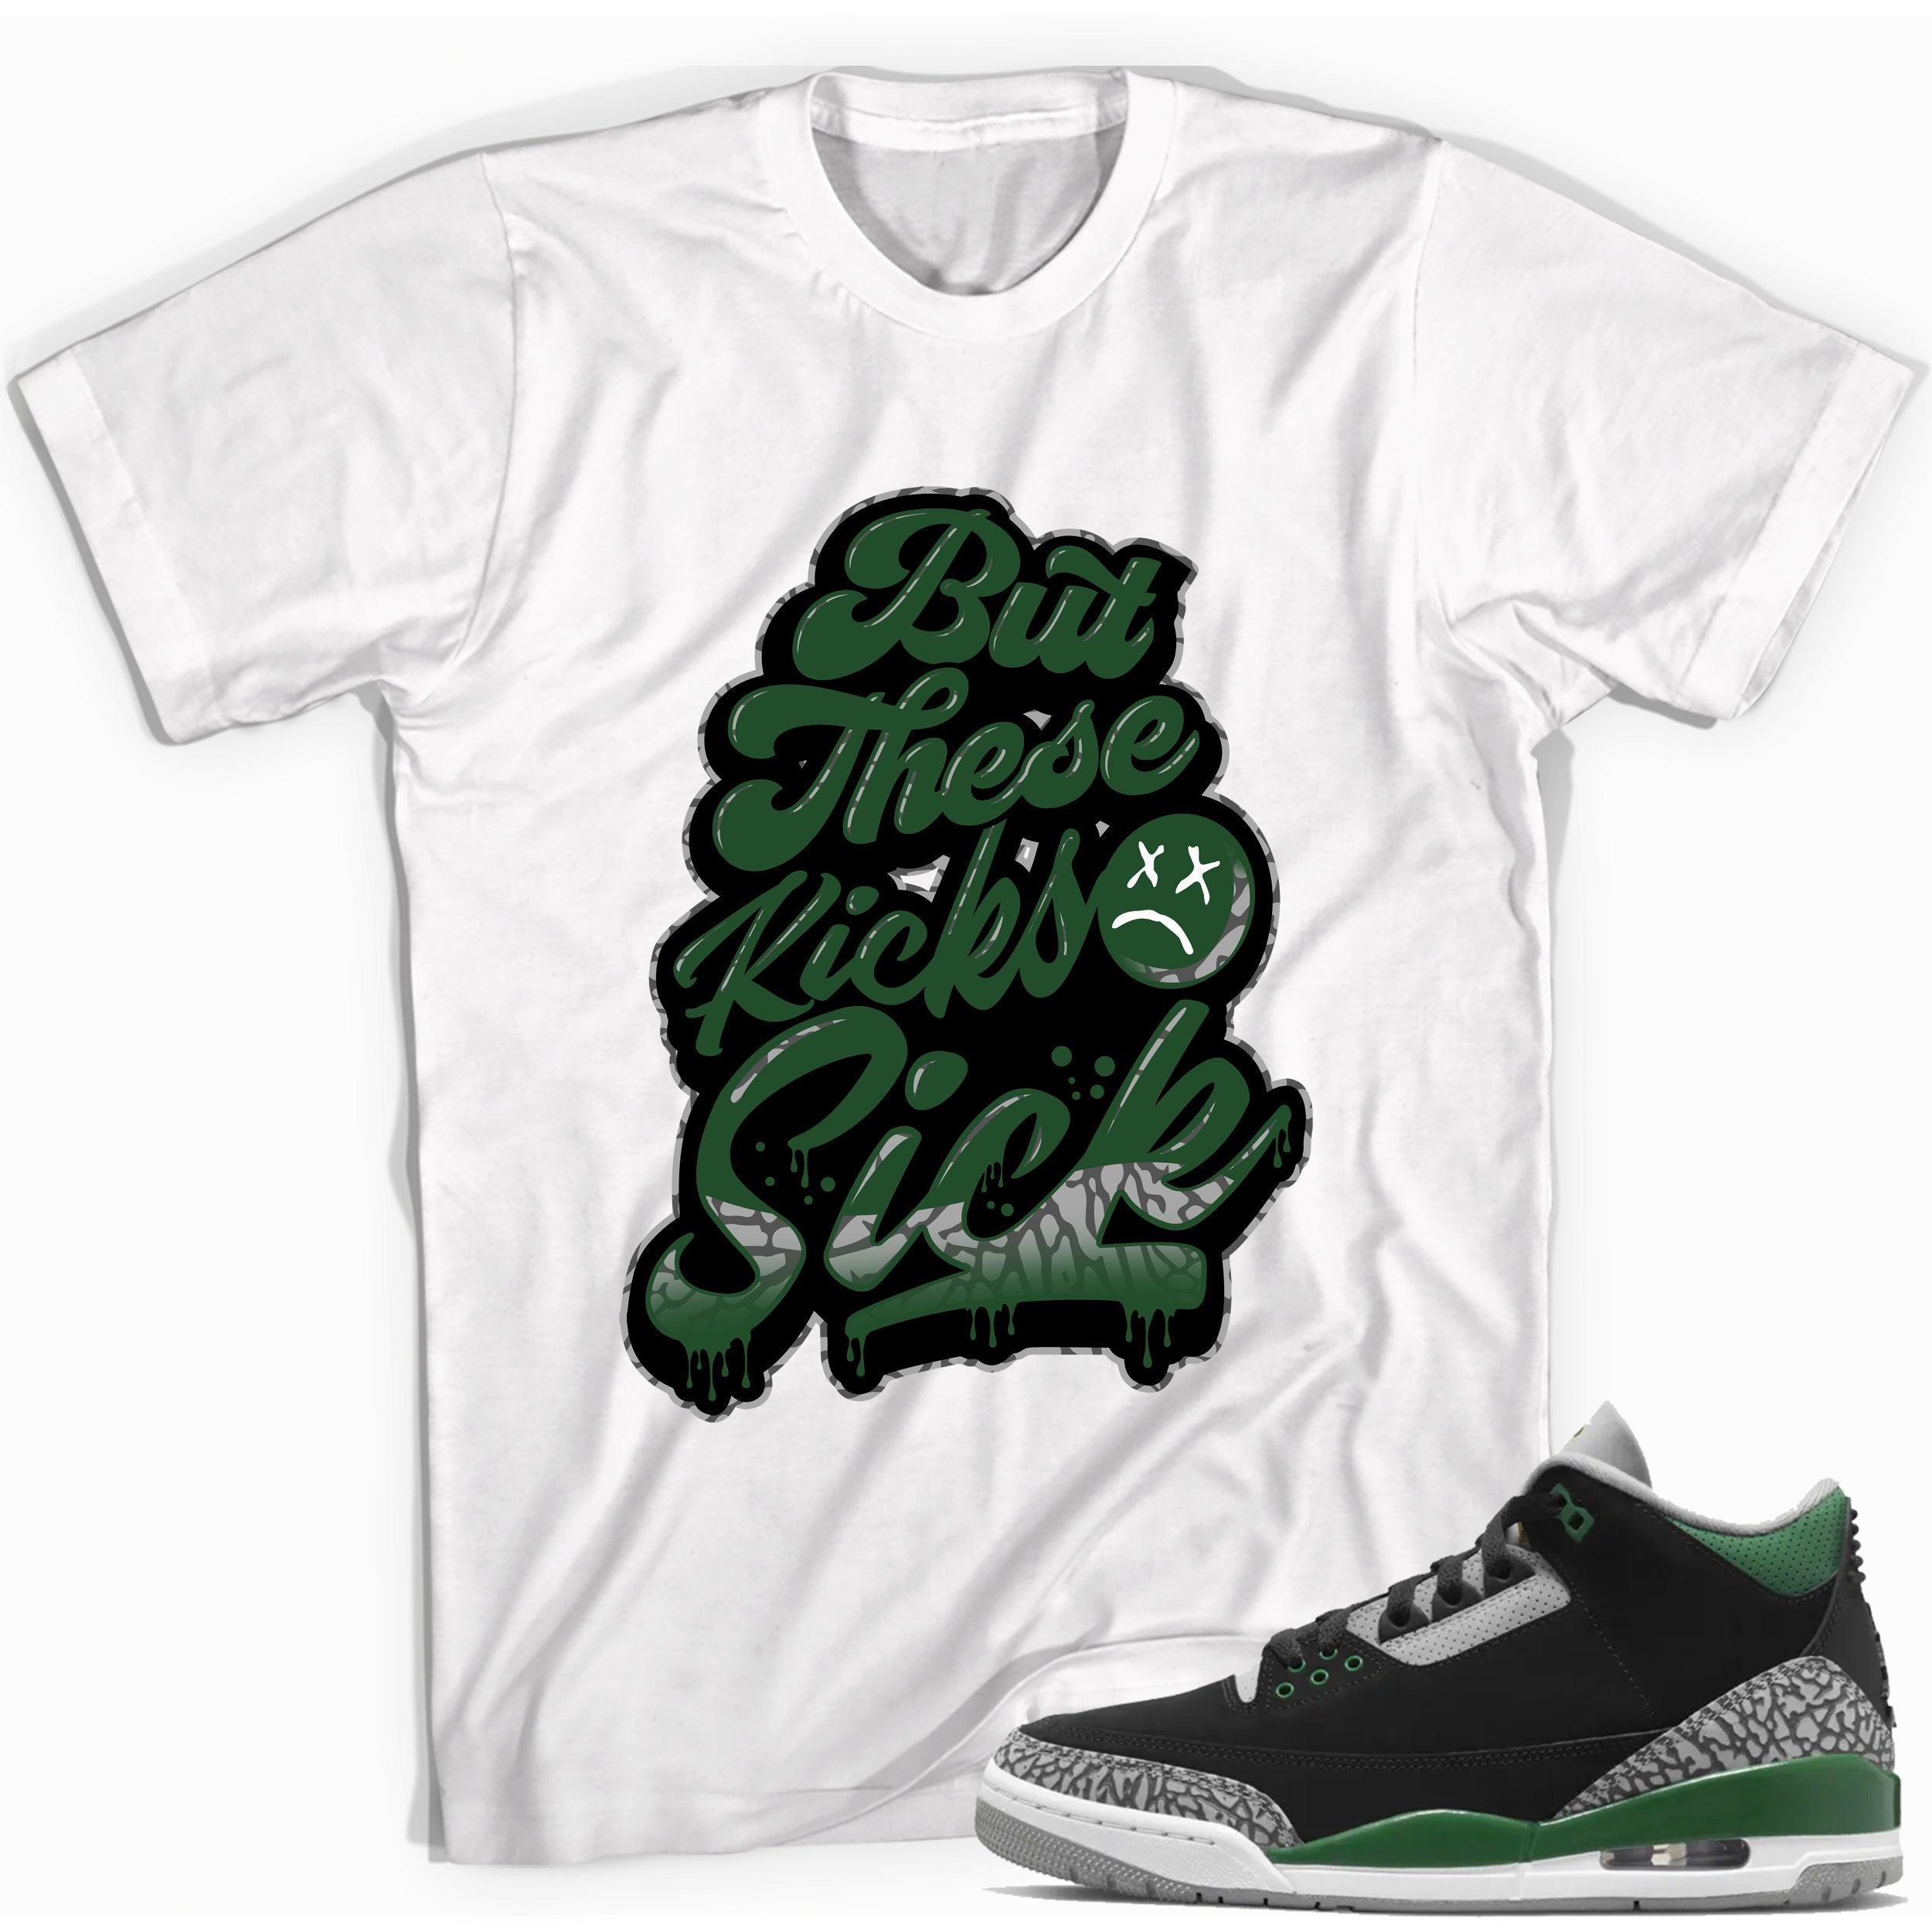 But These Kicks Sick Shirt Jordan 3s Pine Green photo